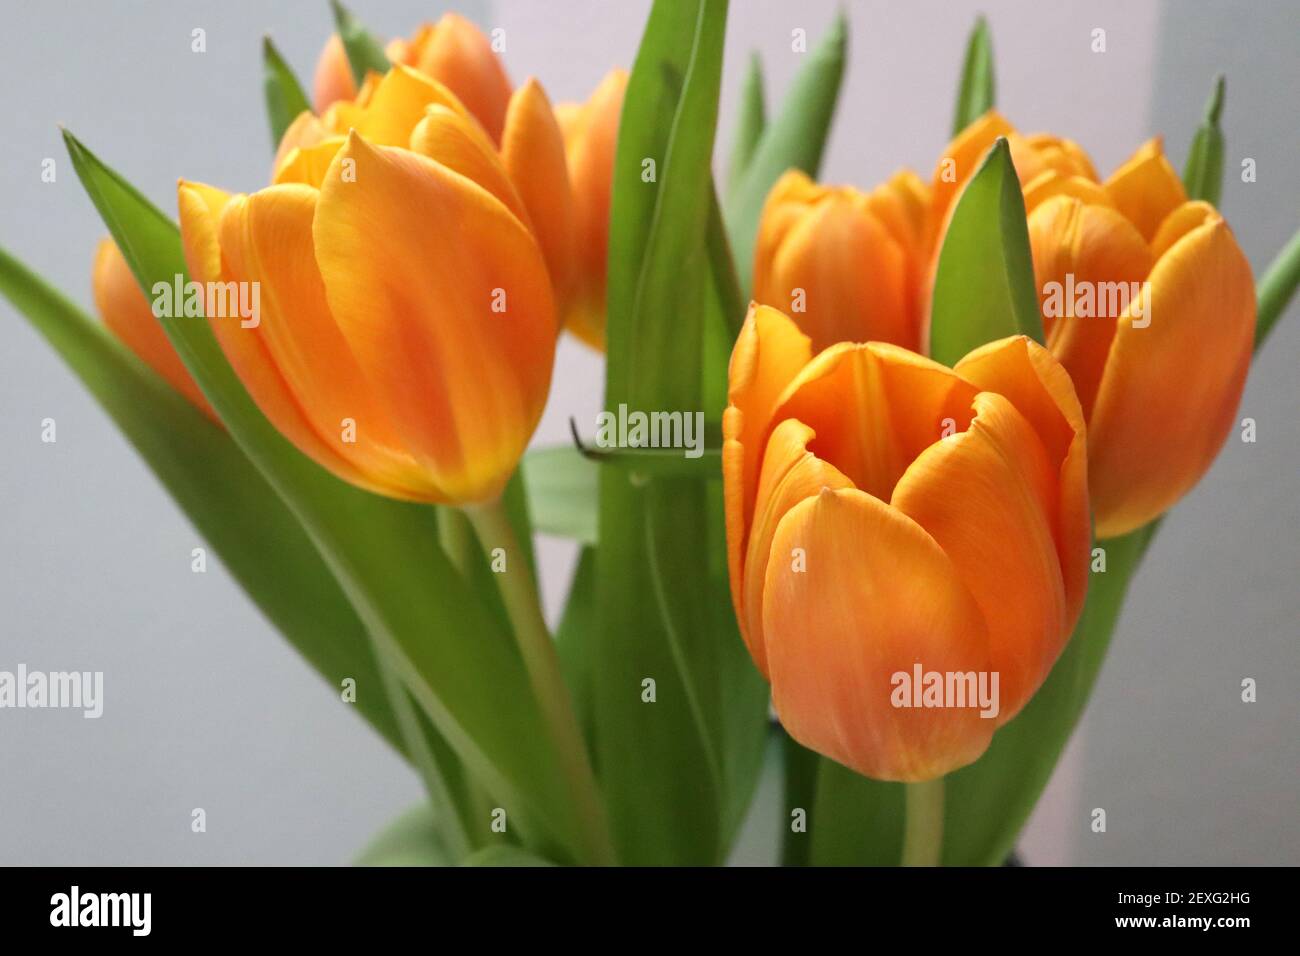 Tulipa orange from supermarket Orange tulips – deep orange yellow tulips, March, England, UK Stock Photo